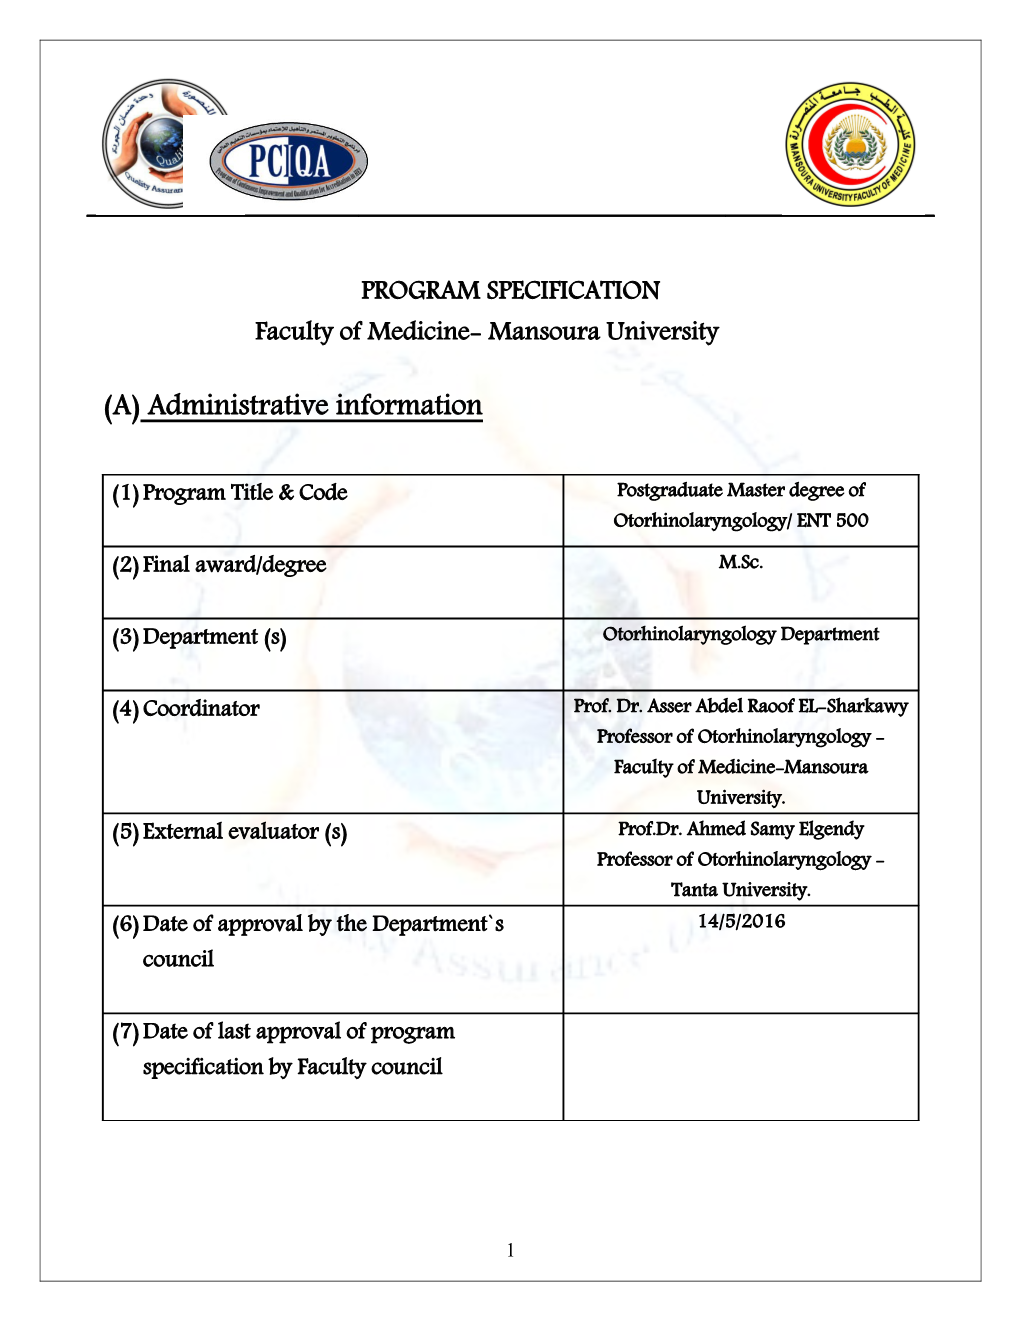 Faculty of Medicine- Mansoura University s2